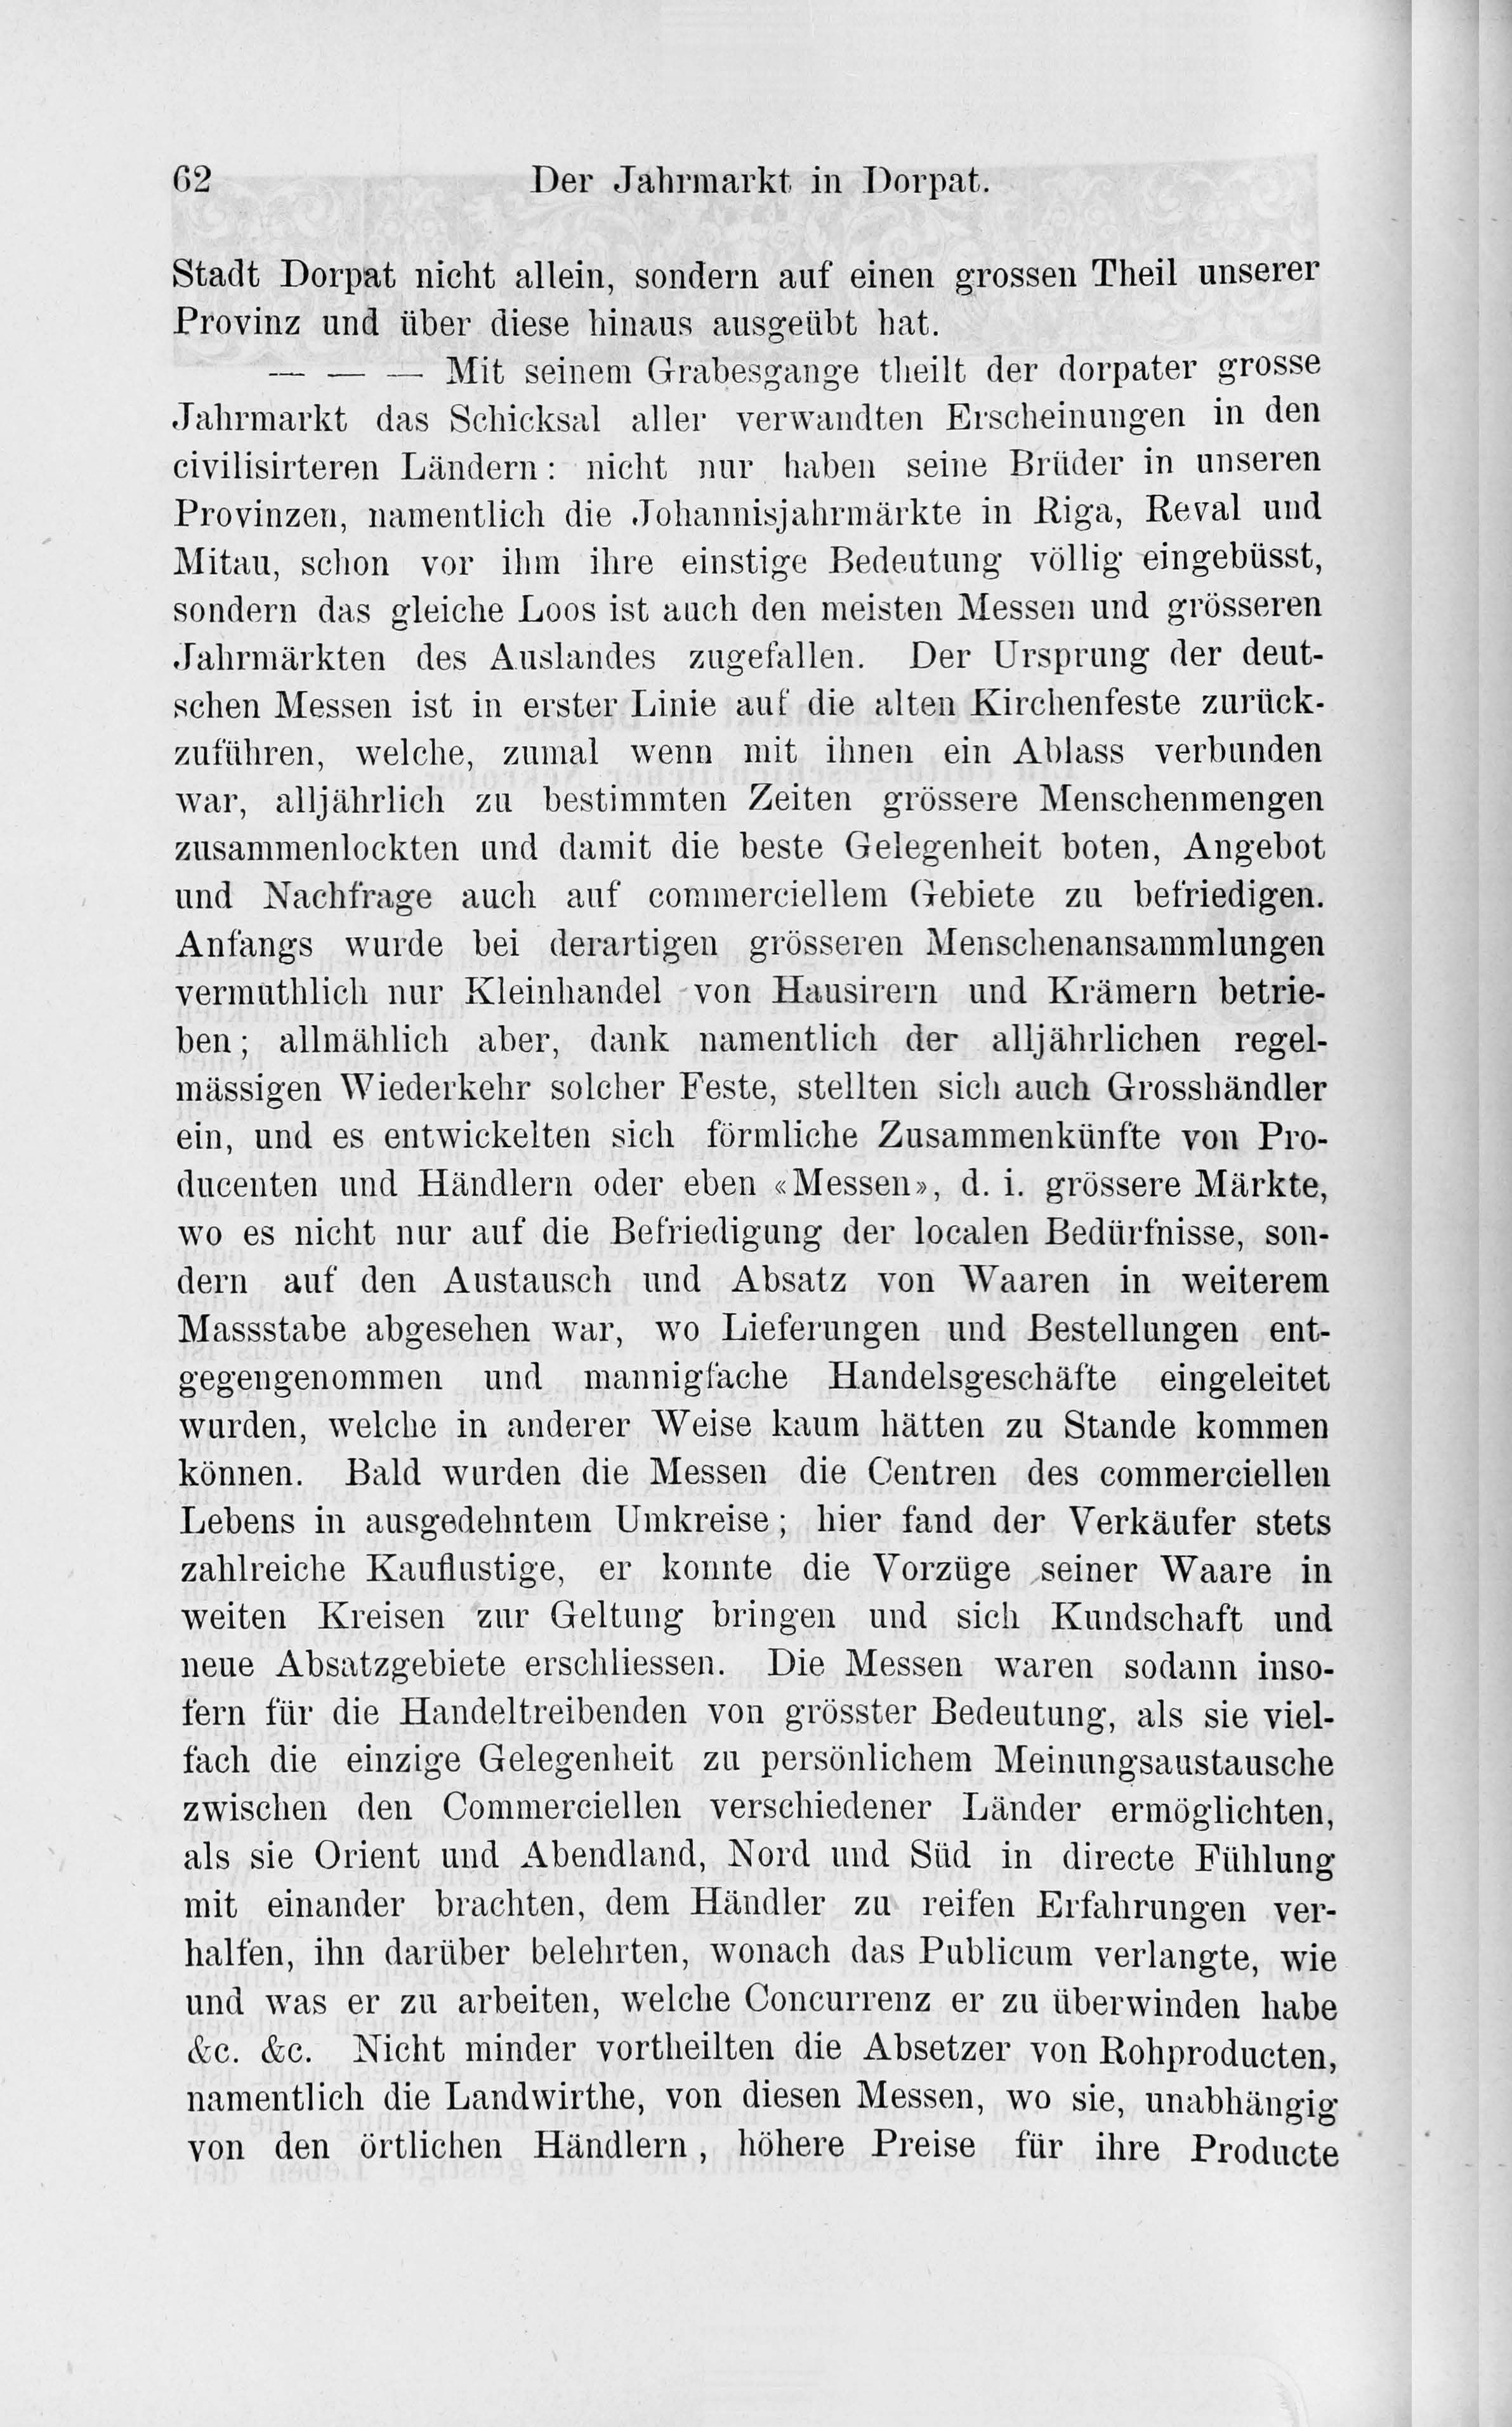 Der Jahrmarkt in Dorpat [1] (1884) | 2. Основной текст